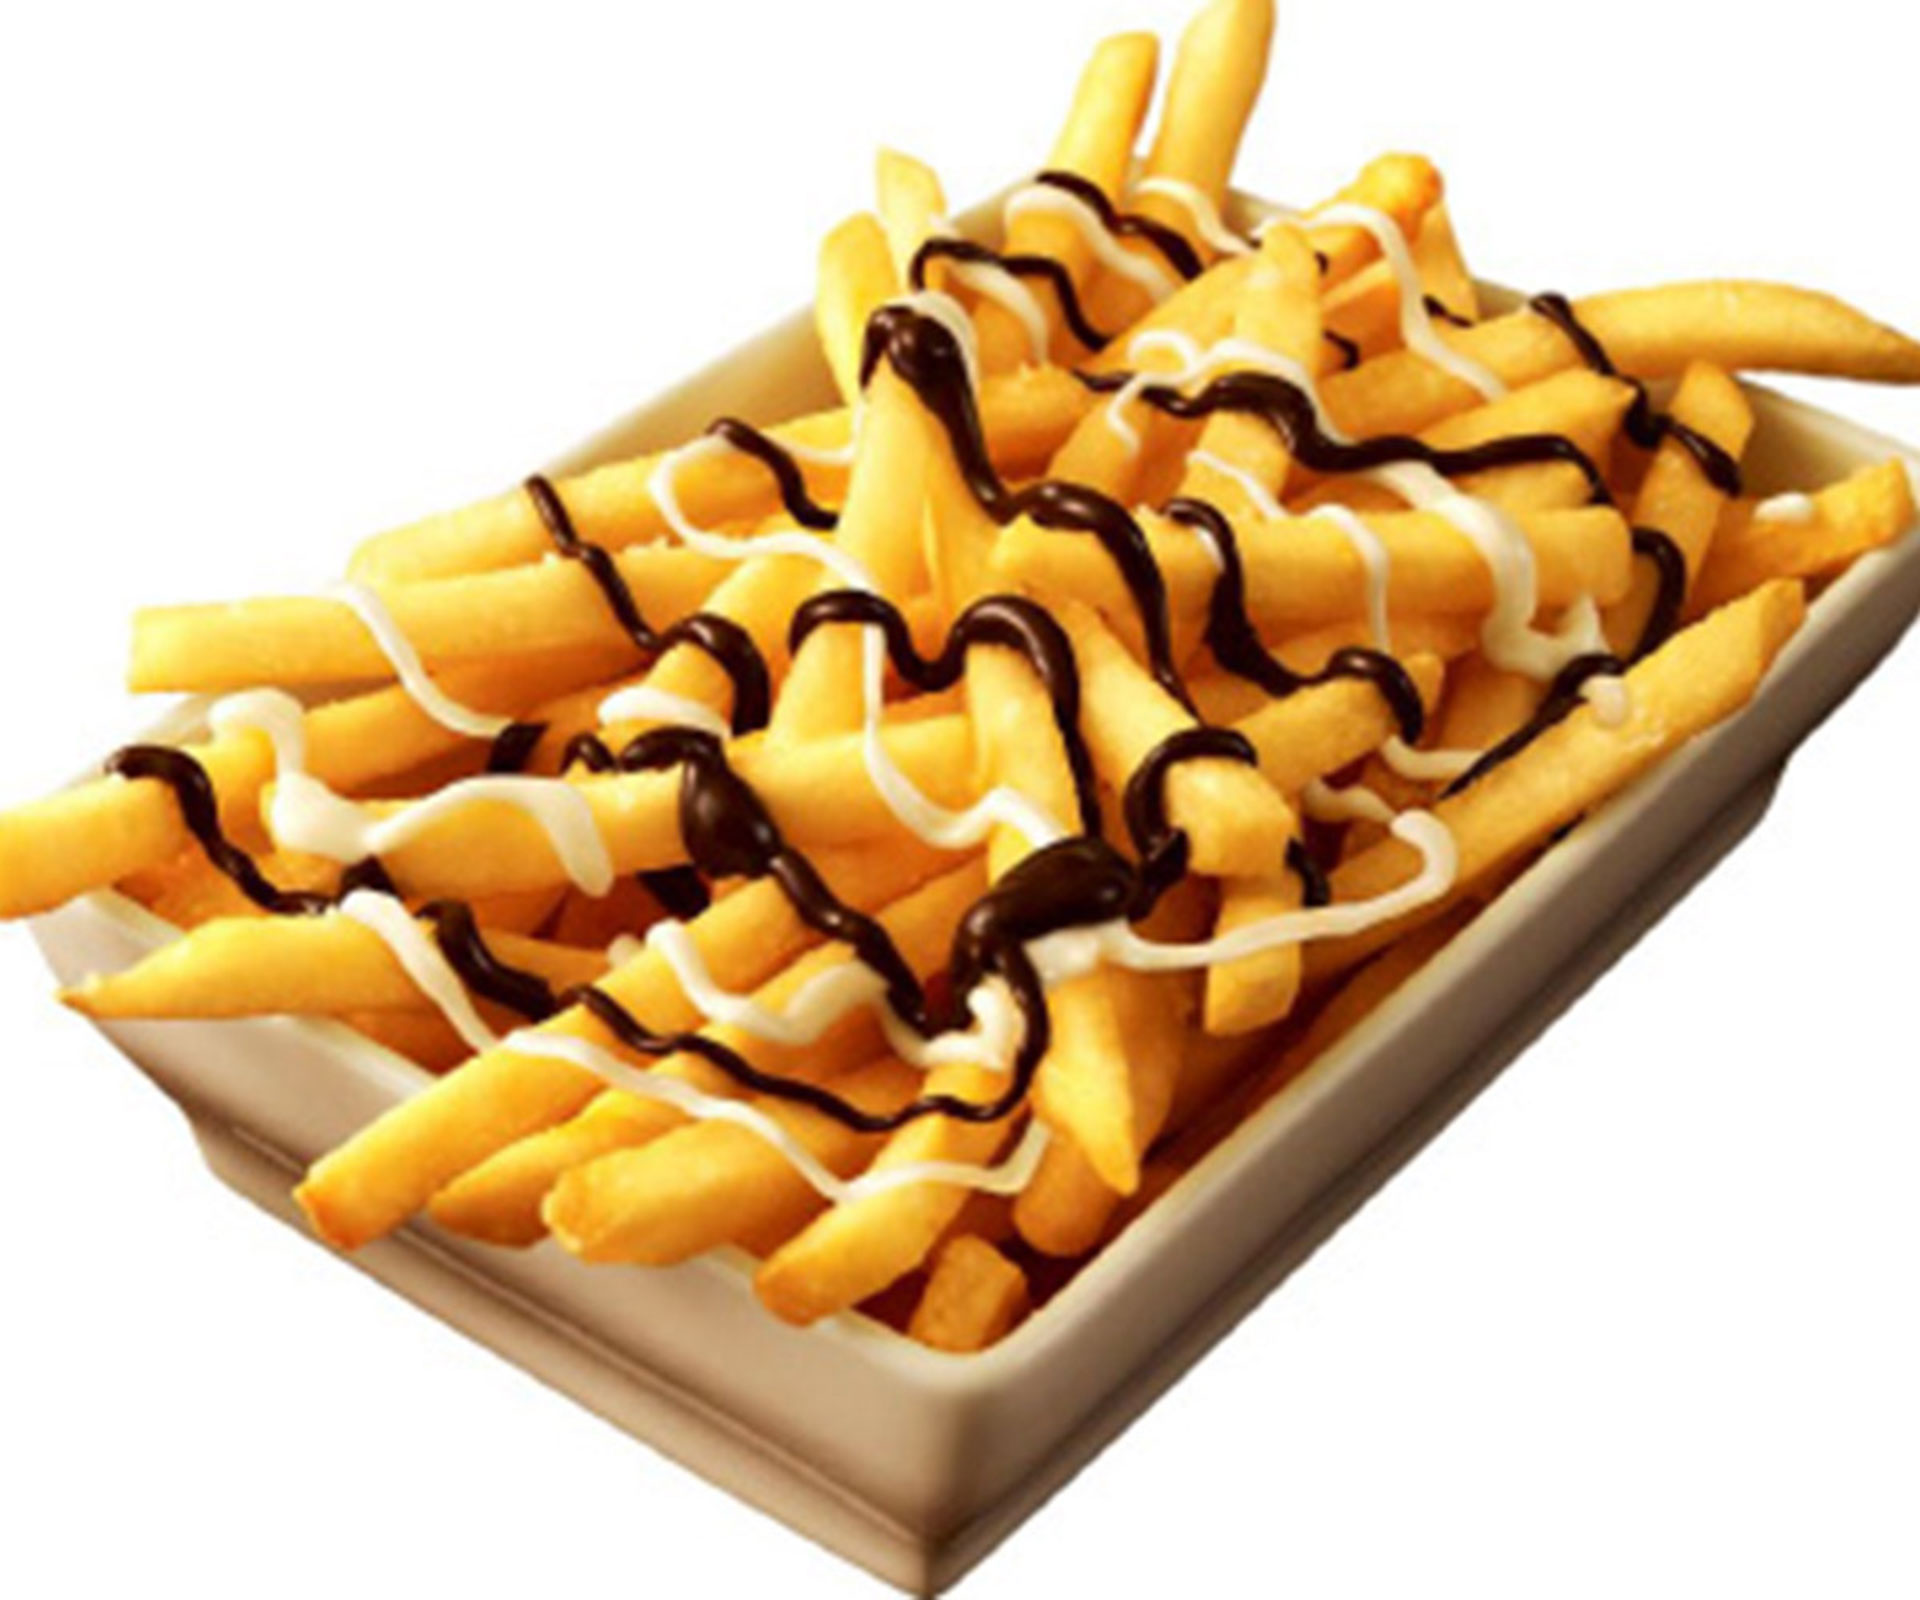 McDonald’s launch chocolate fries